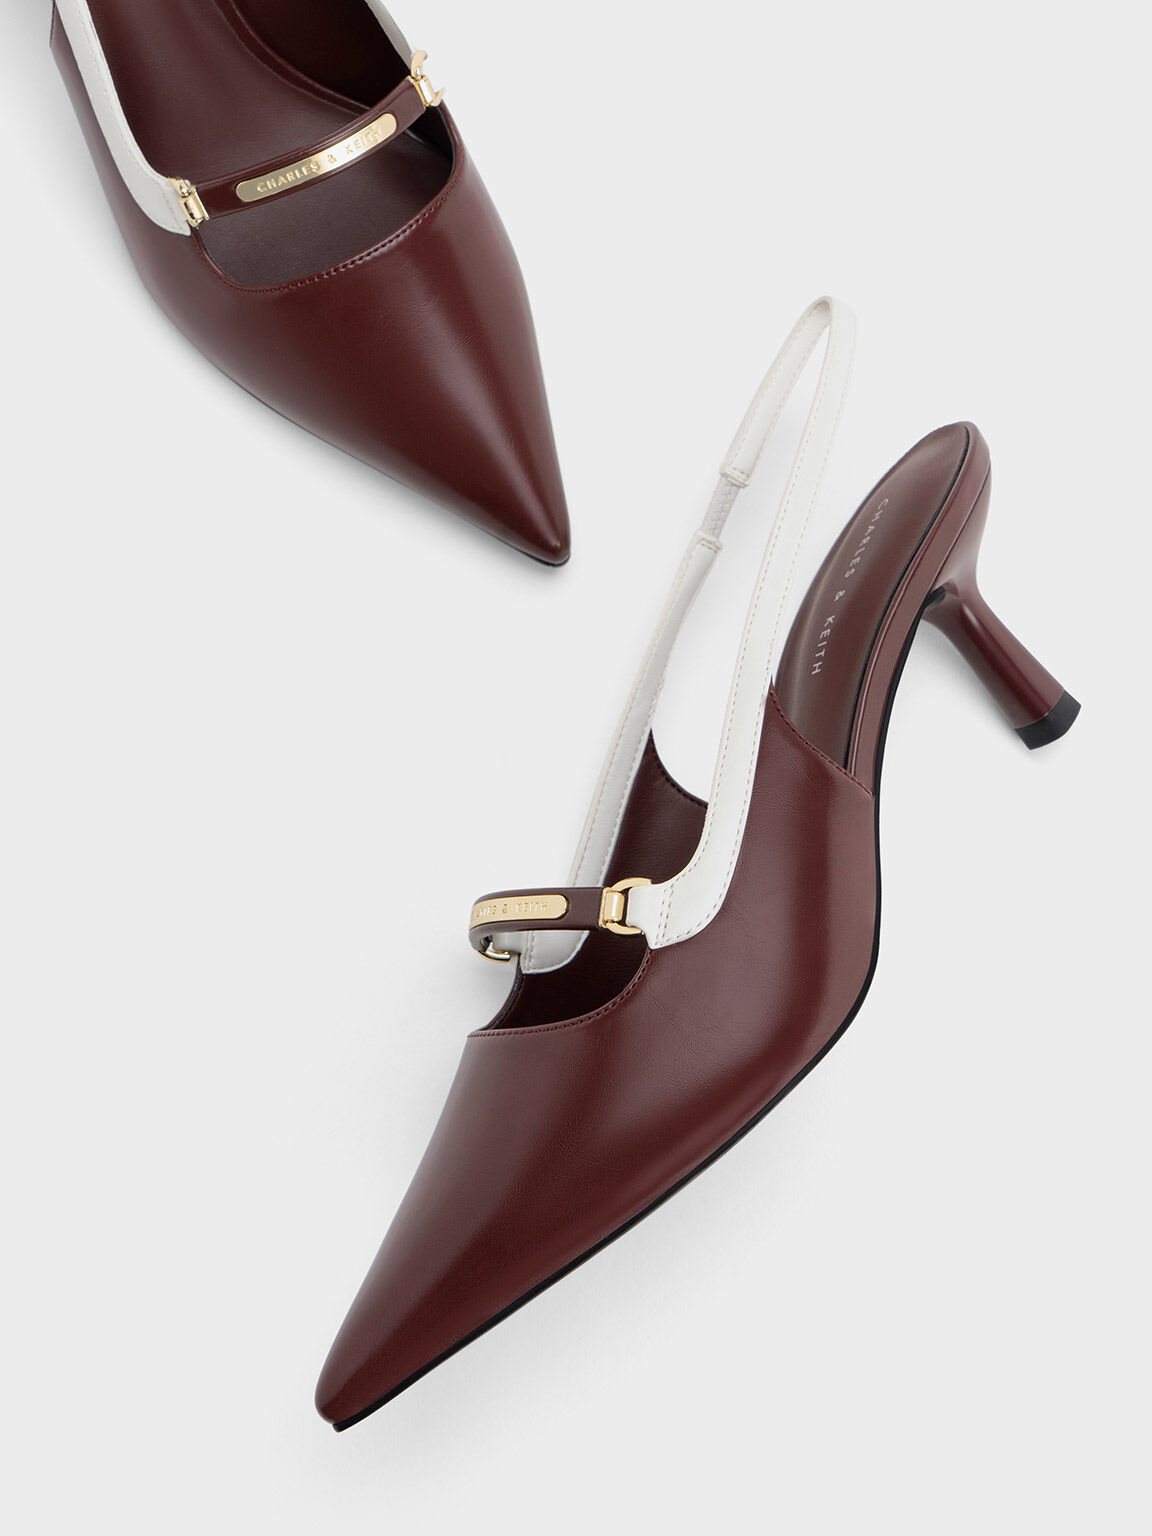 Finally! Heels in maroon 🍒 the it girl color! #maroon #redheels #mill... |  TikTok